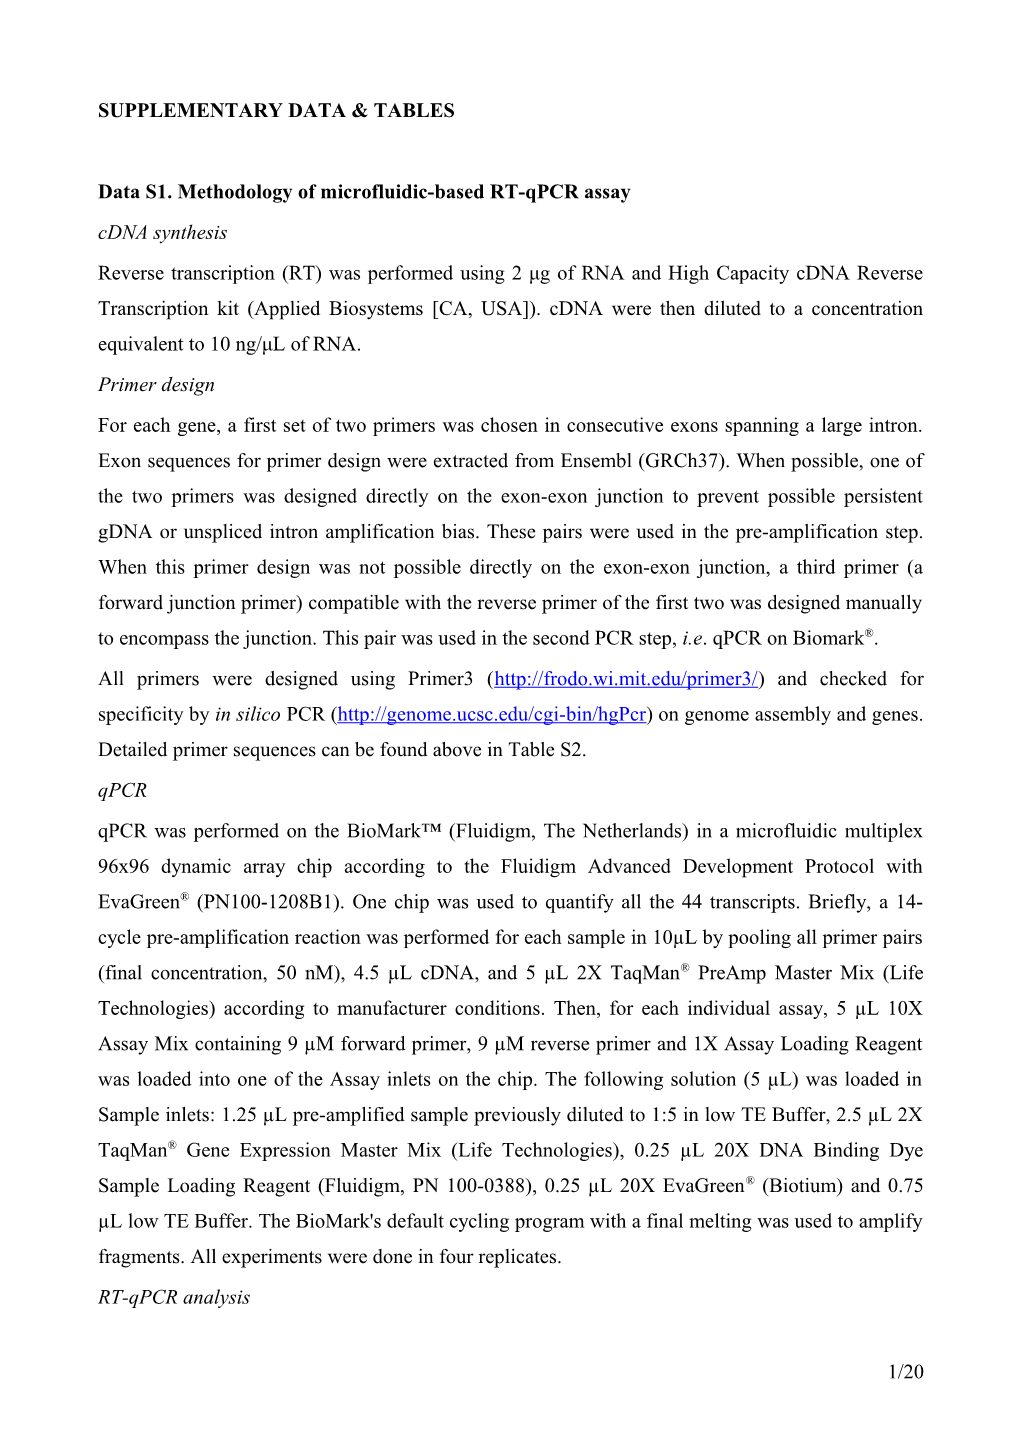 Data S1. Methodology of Microfluidic-Based RT-Qpcr Assay